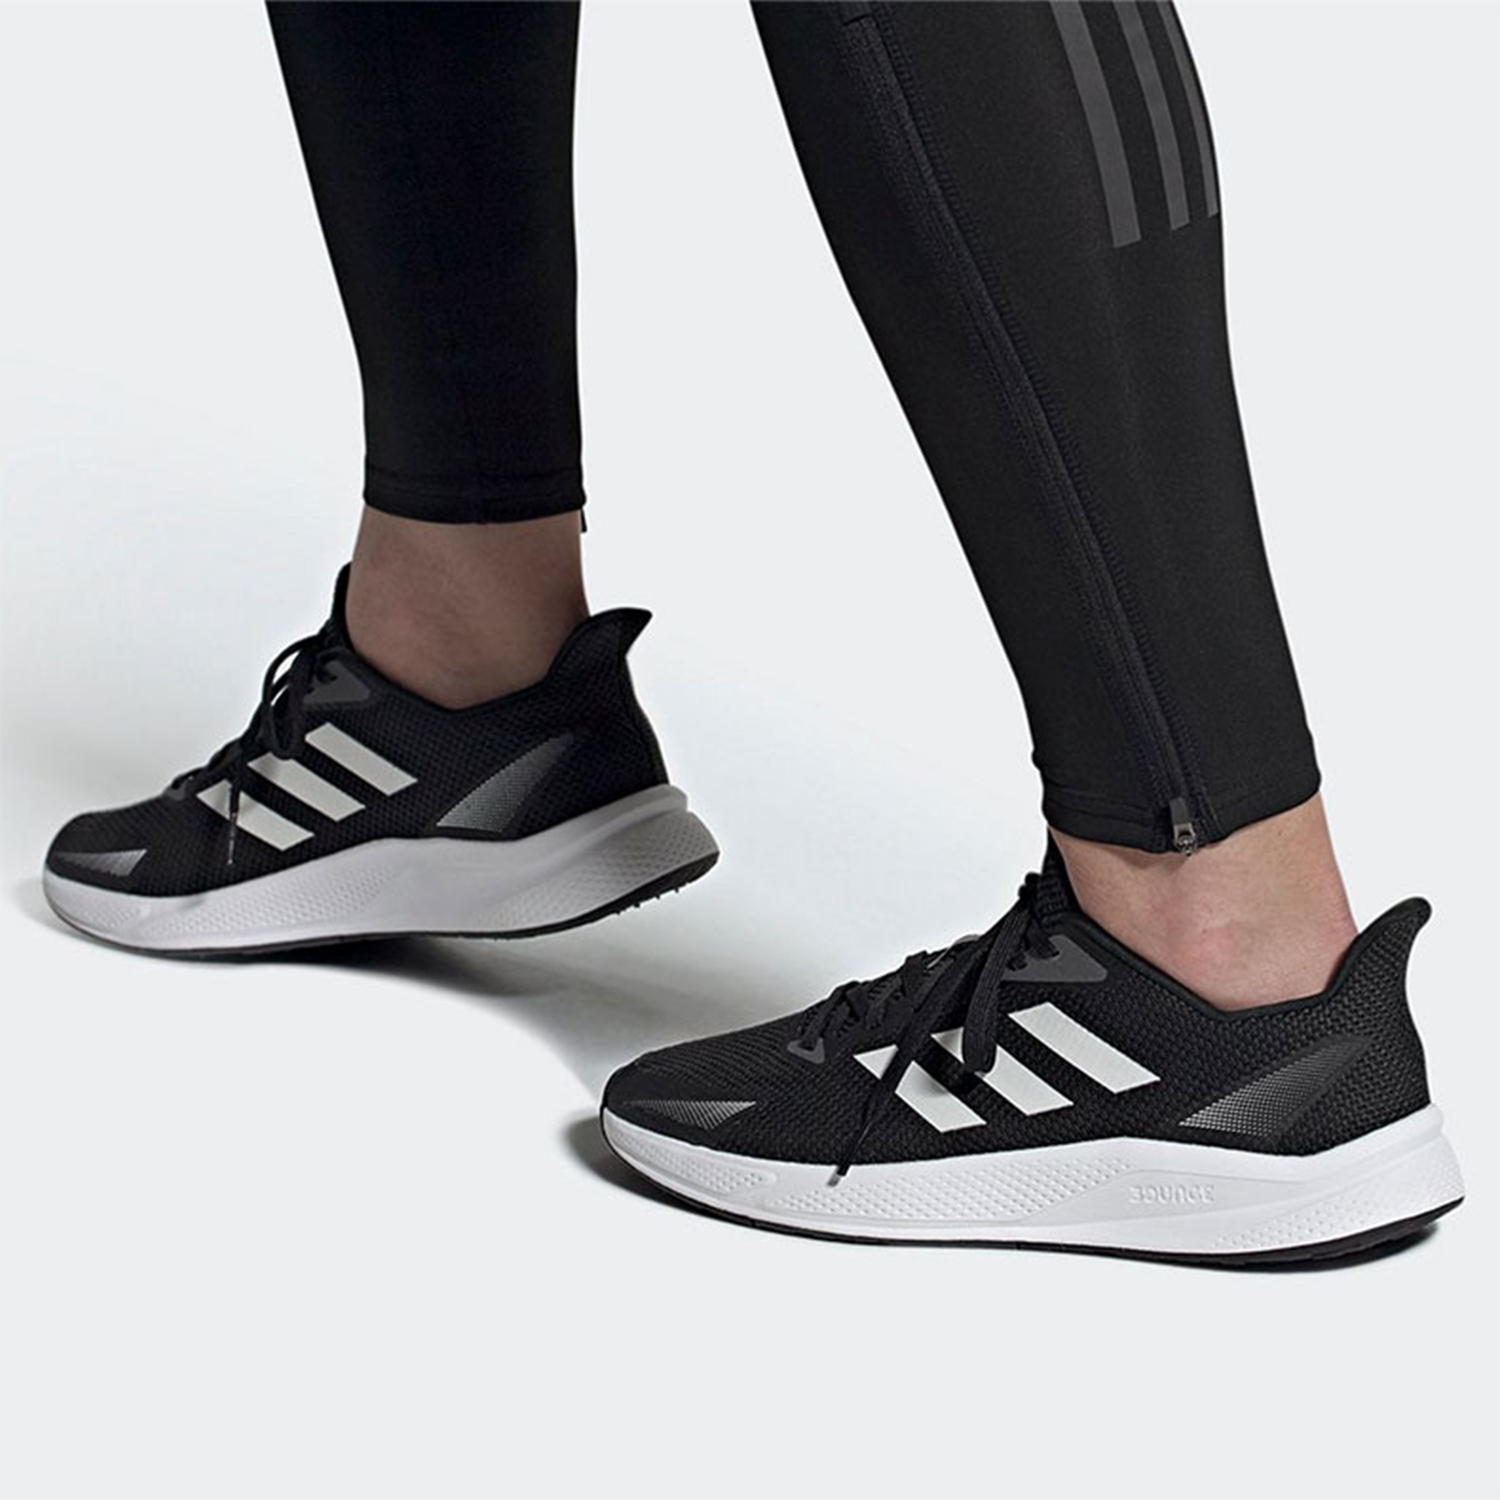 Adidas/阿迪达斯正品 X9000L1 M 男子轻便跑步运动休闲鞋 EG4792 - 图3